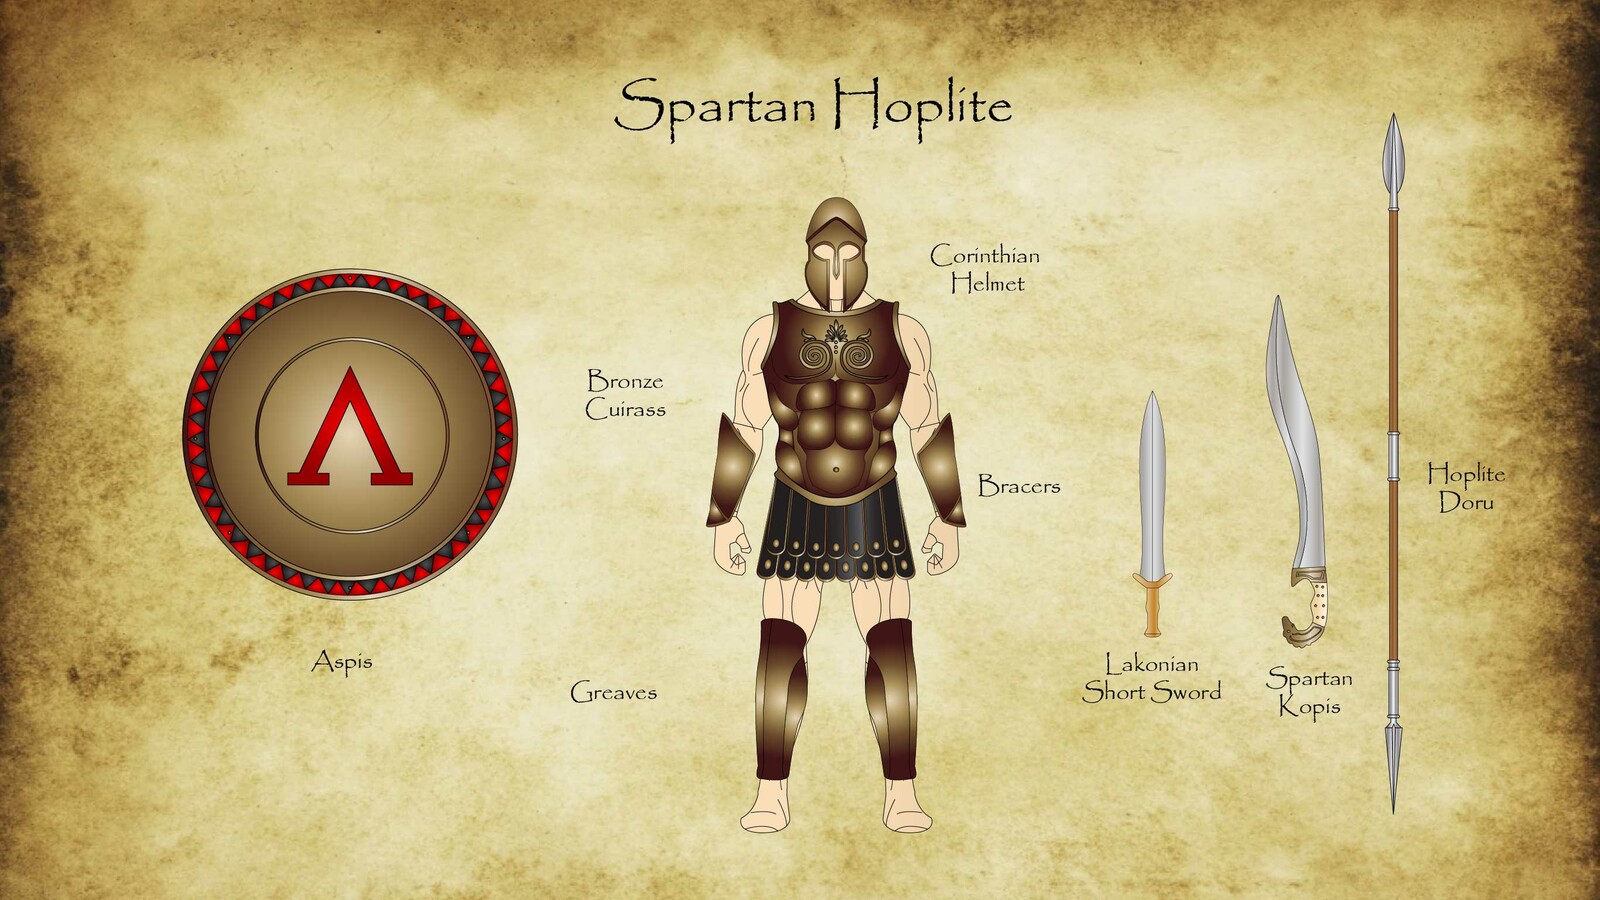 Spartan Hoplite, Josh Morris